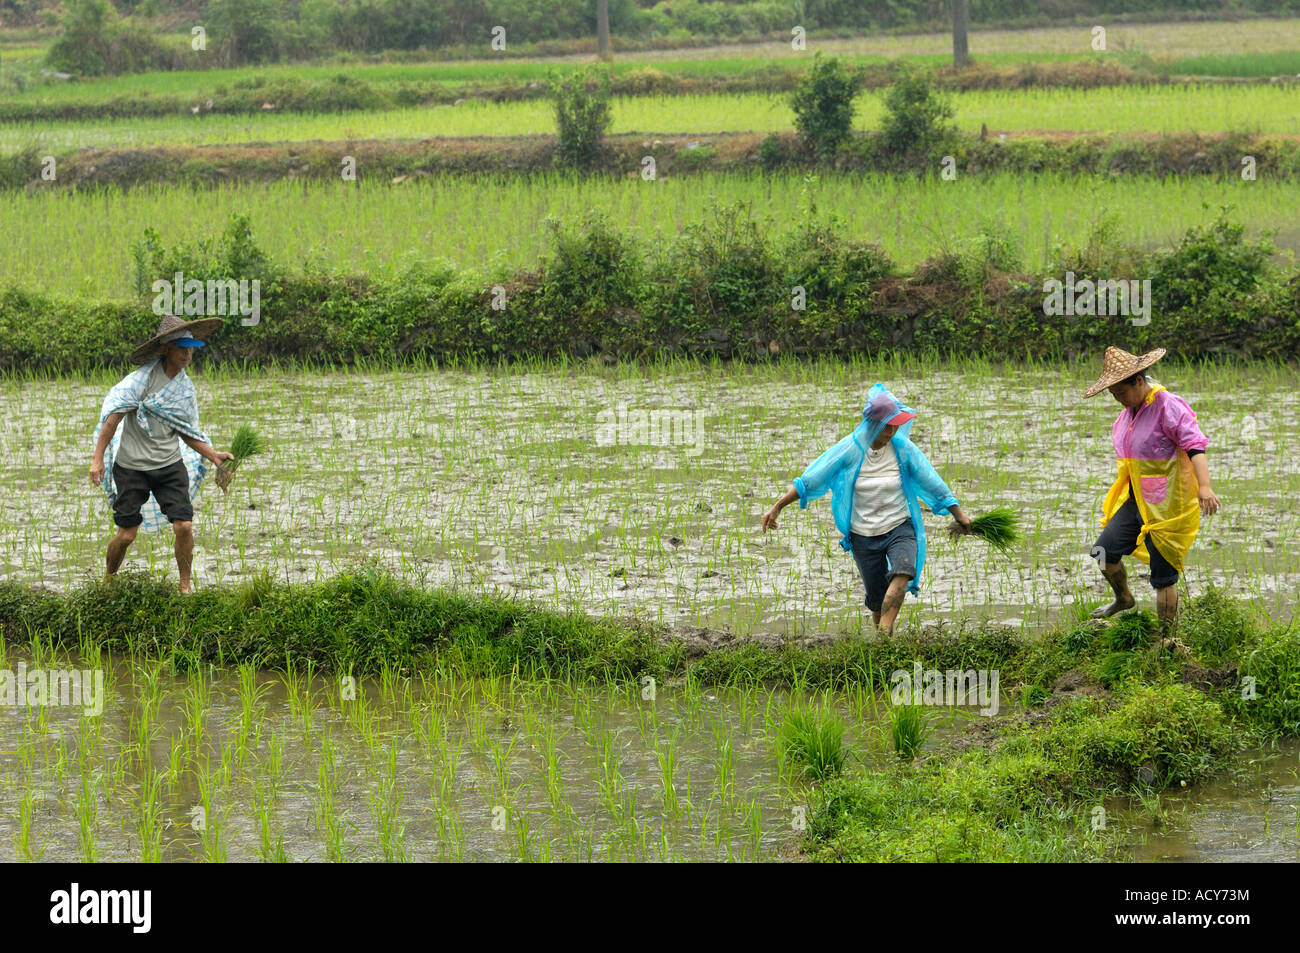 Chinesische Bauern transplant Reis Sämlinge auf einem Reisfeld in Likeng Dorf Wuyuan Jiangxi China 13. Juni 2007 Stockfoto